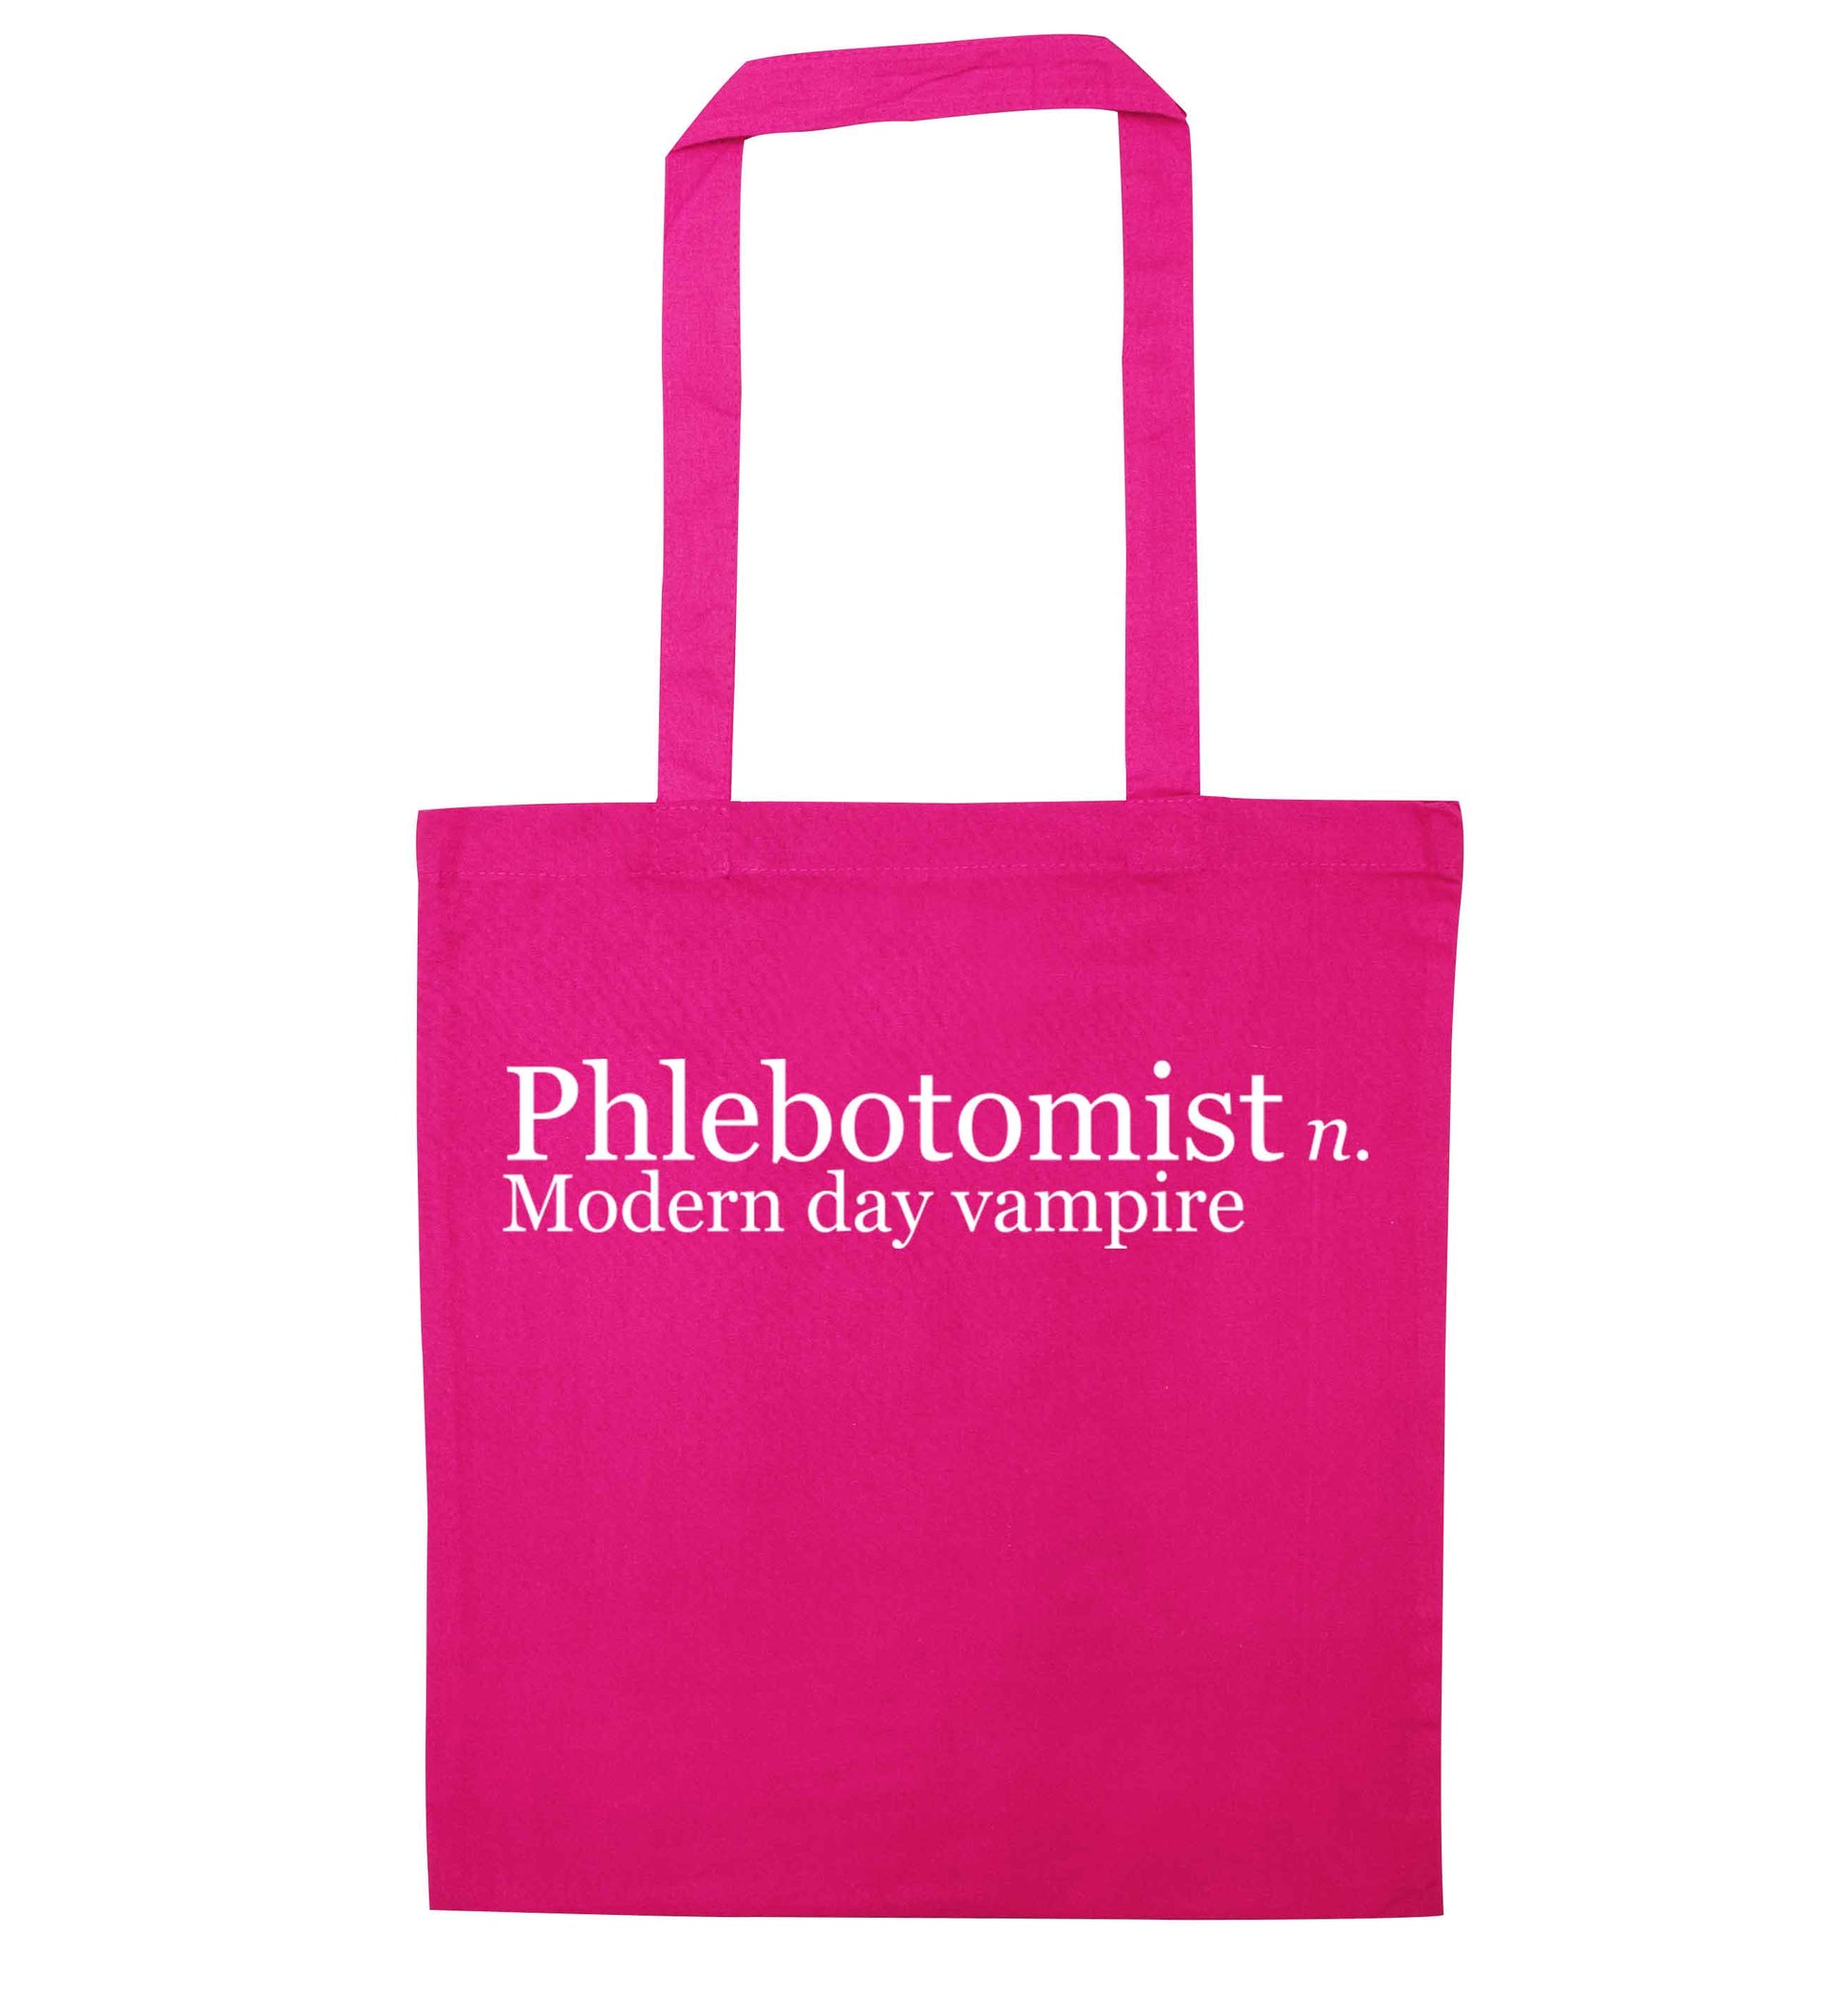 Phlebotomist - Modern day vampire pink tote bag